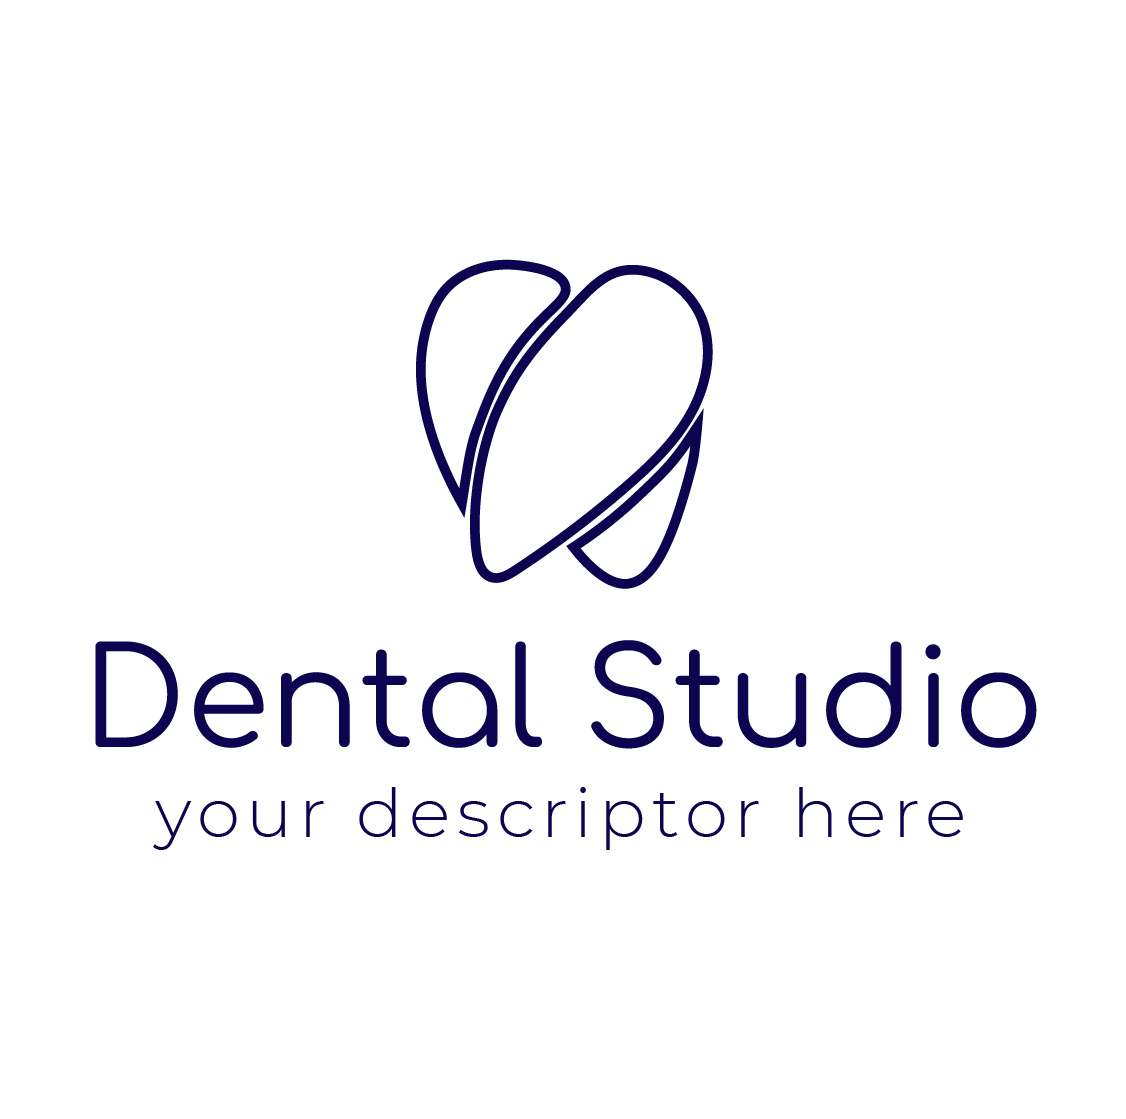 dental logo preview image.